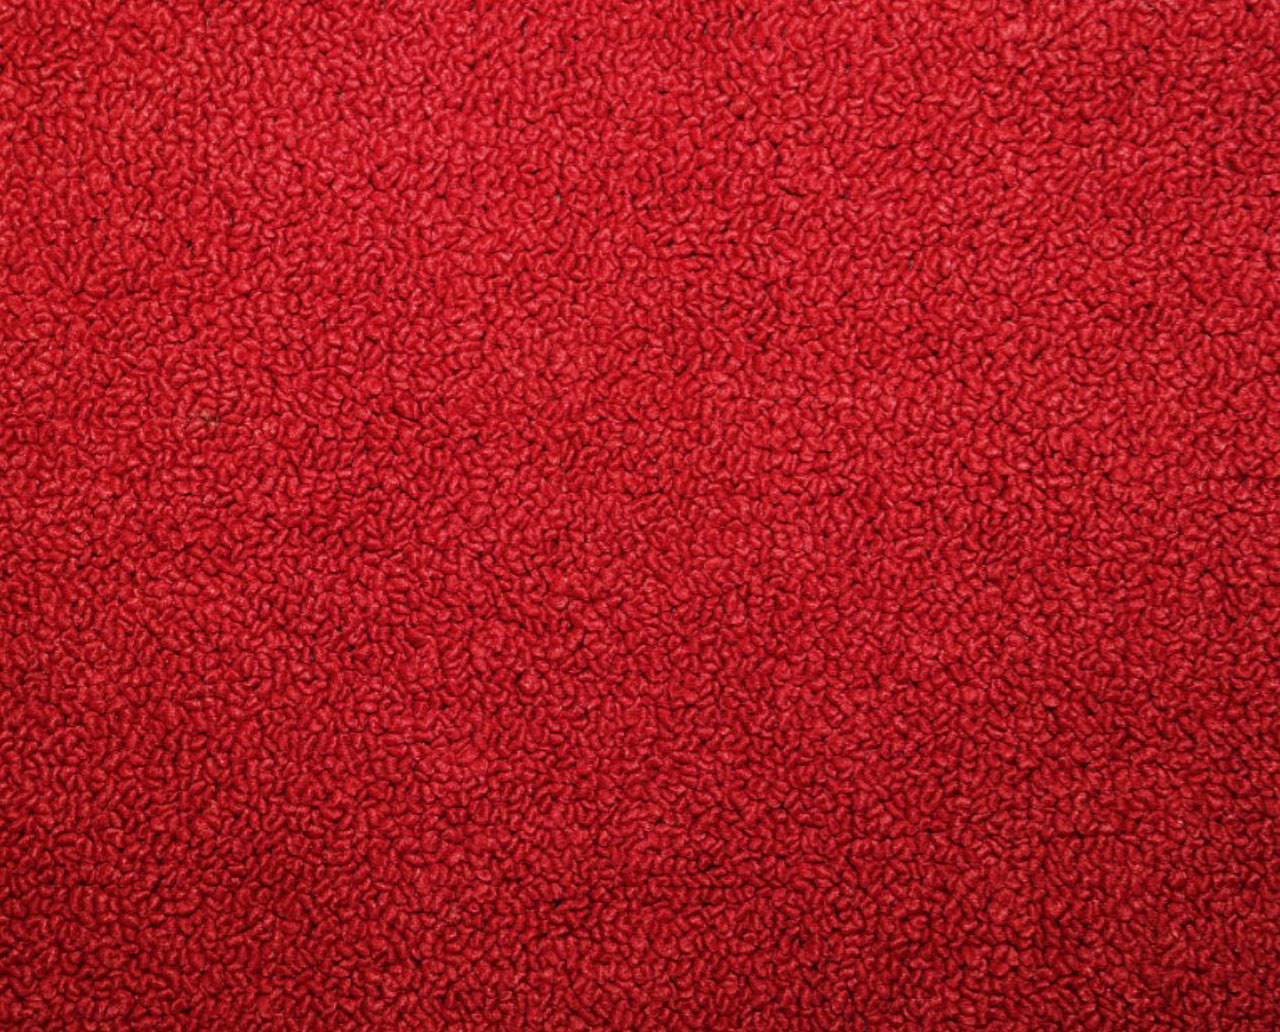 Holden Torana LJ Torana S Sedan 42F Baroque Red Carpet (Image 1 of 1)